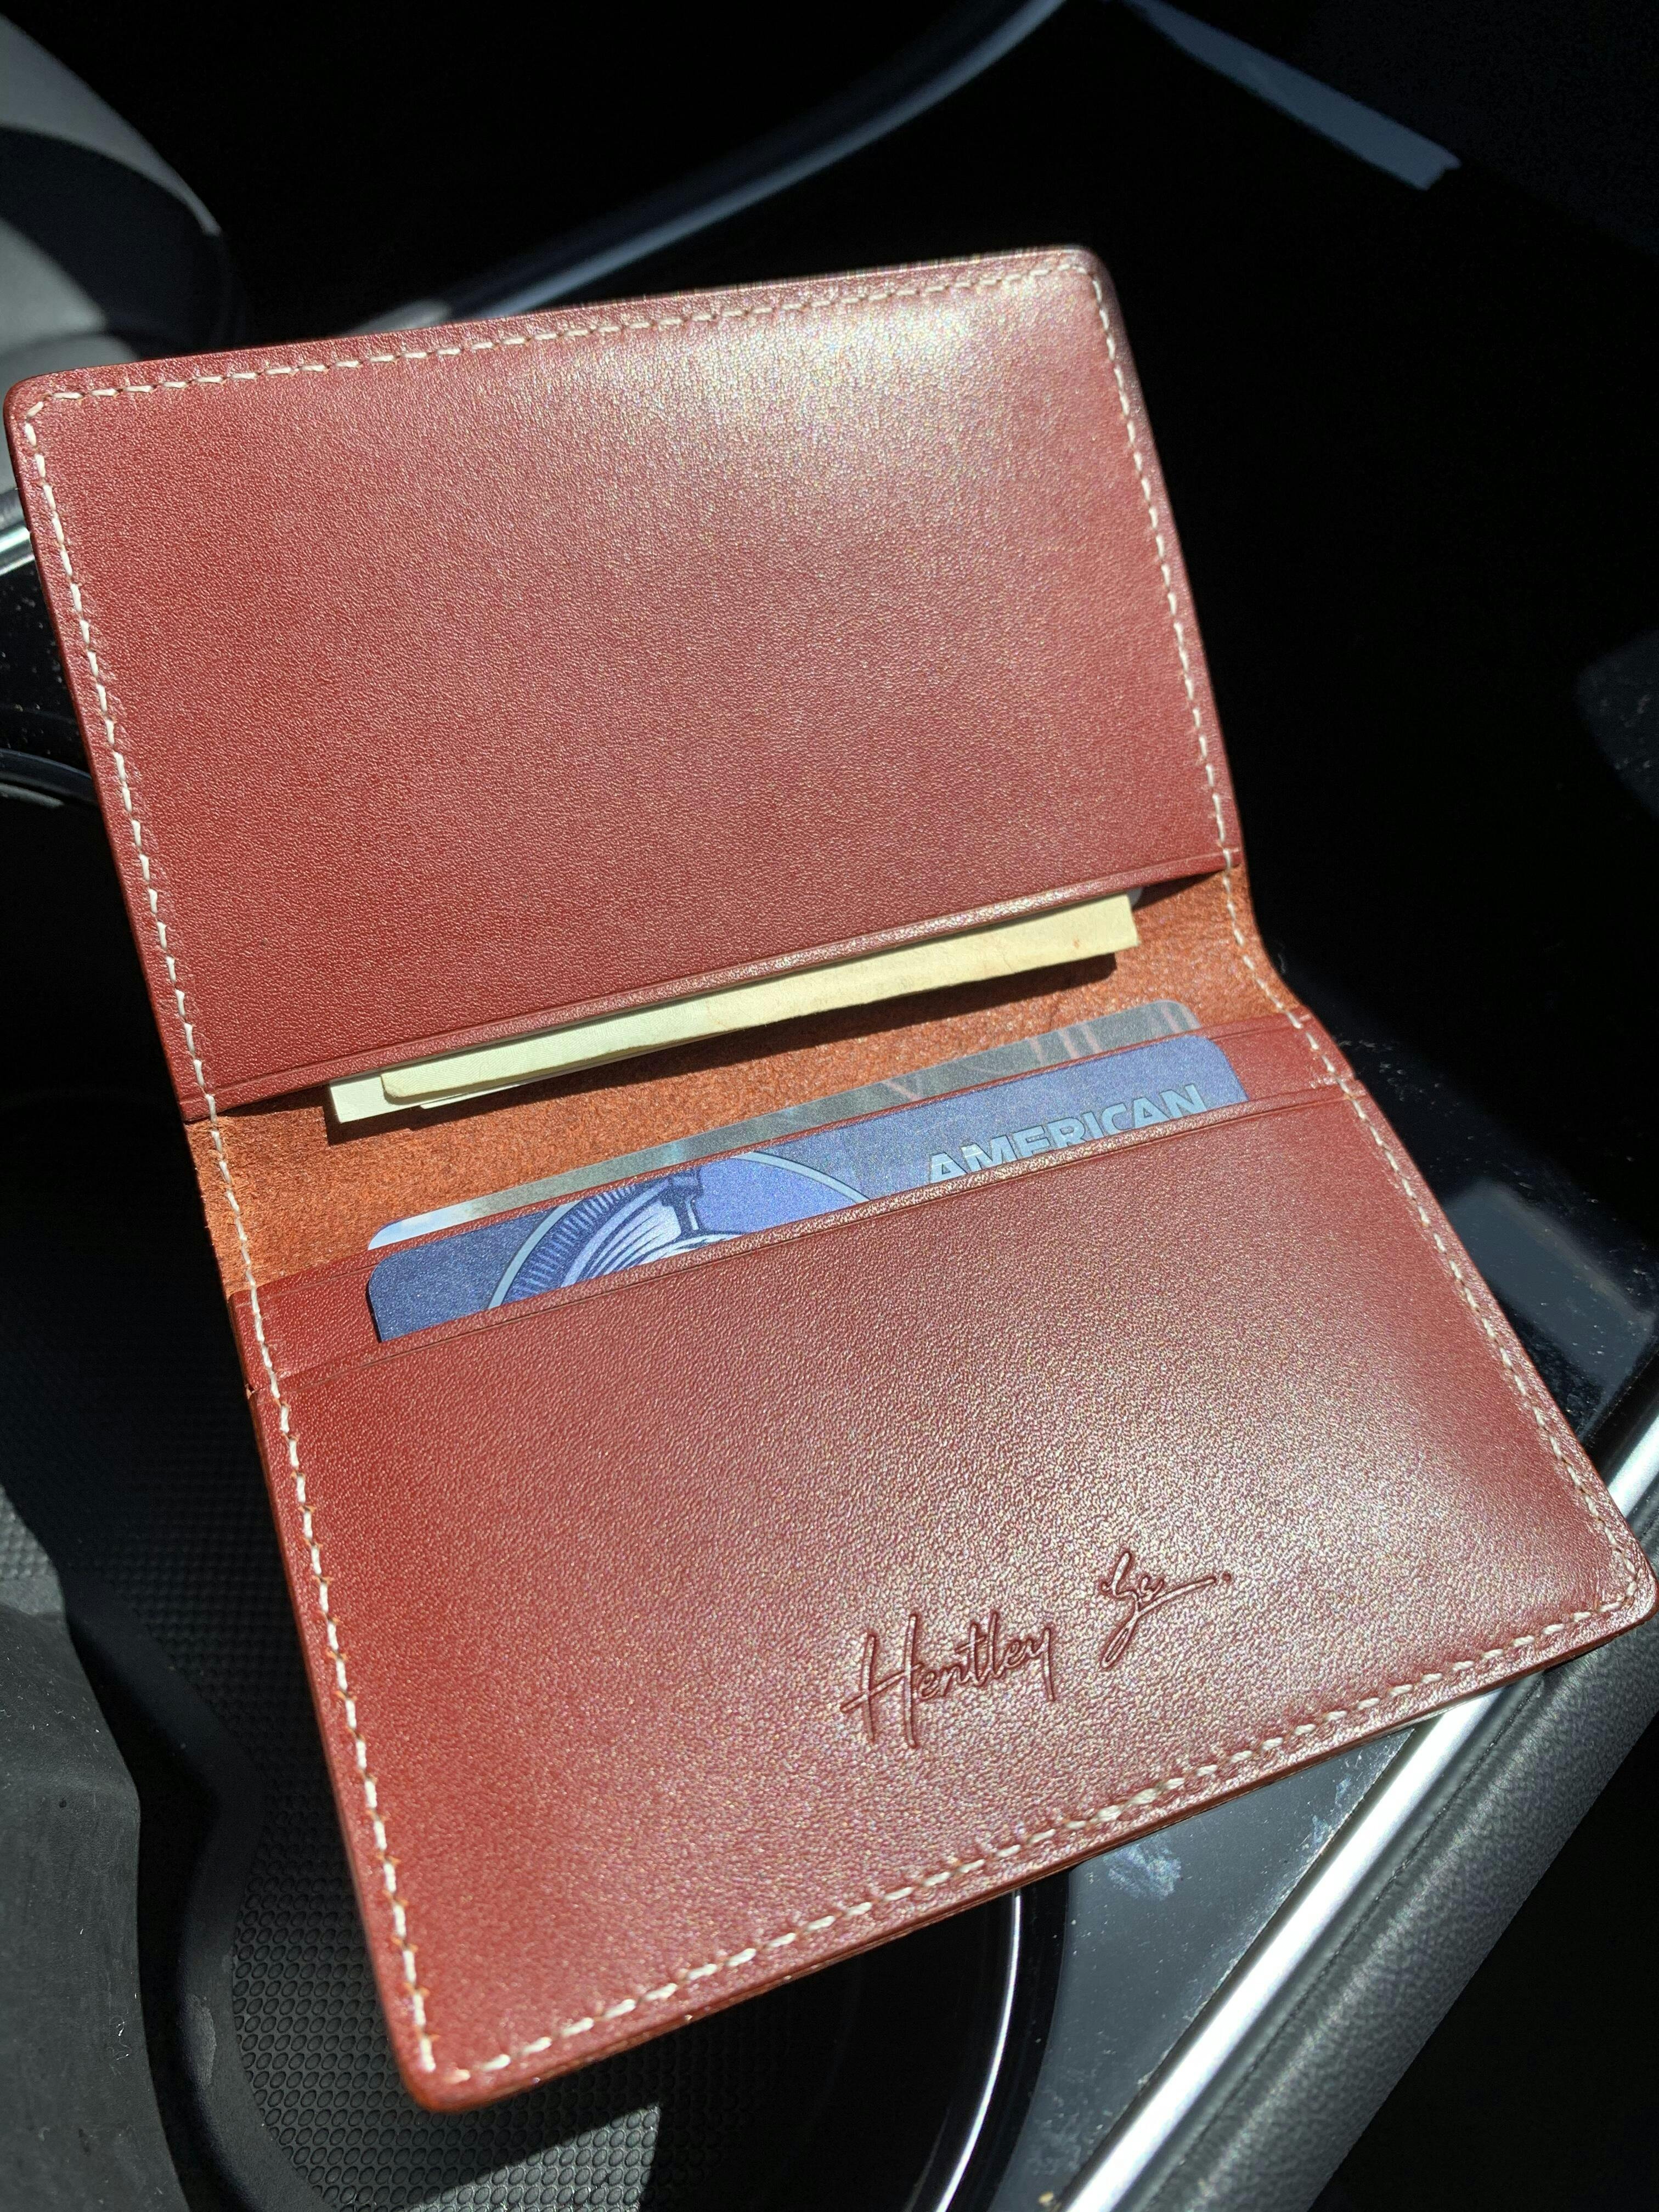 Slim Manhattan Leather Classic Wallet Handmade by Hentley